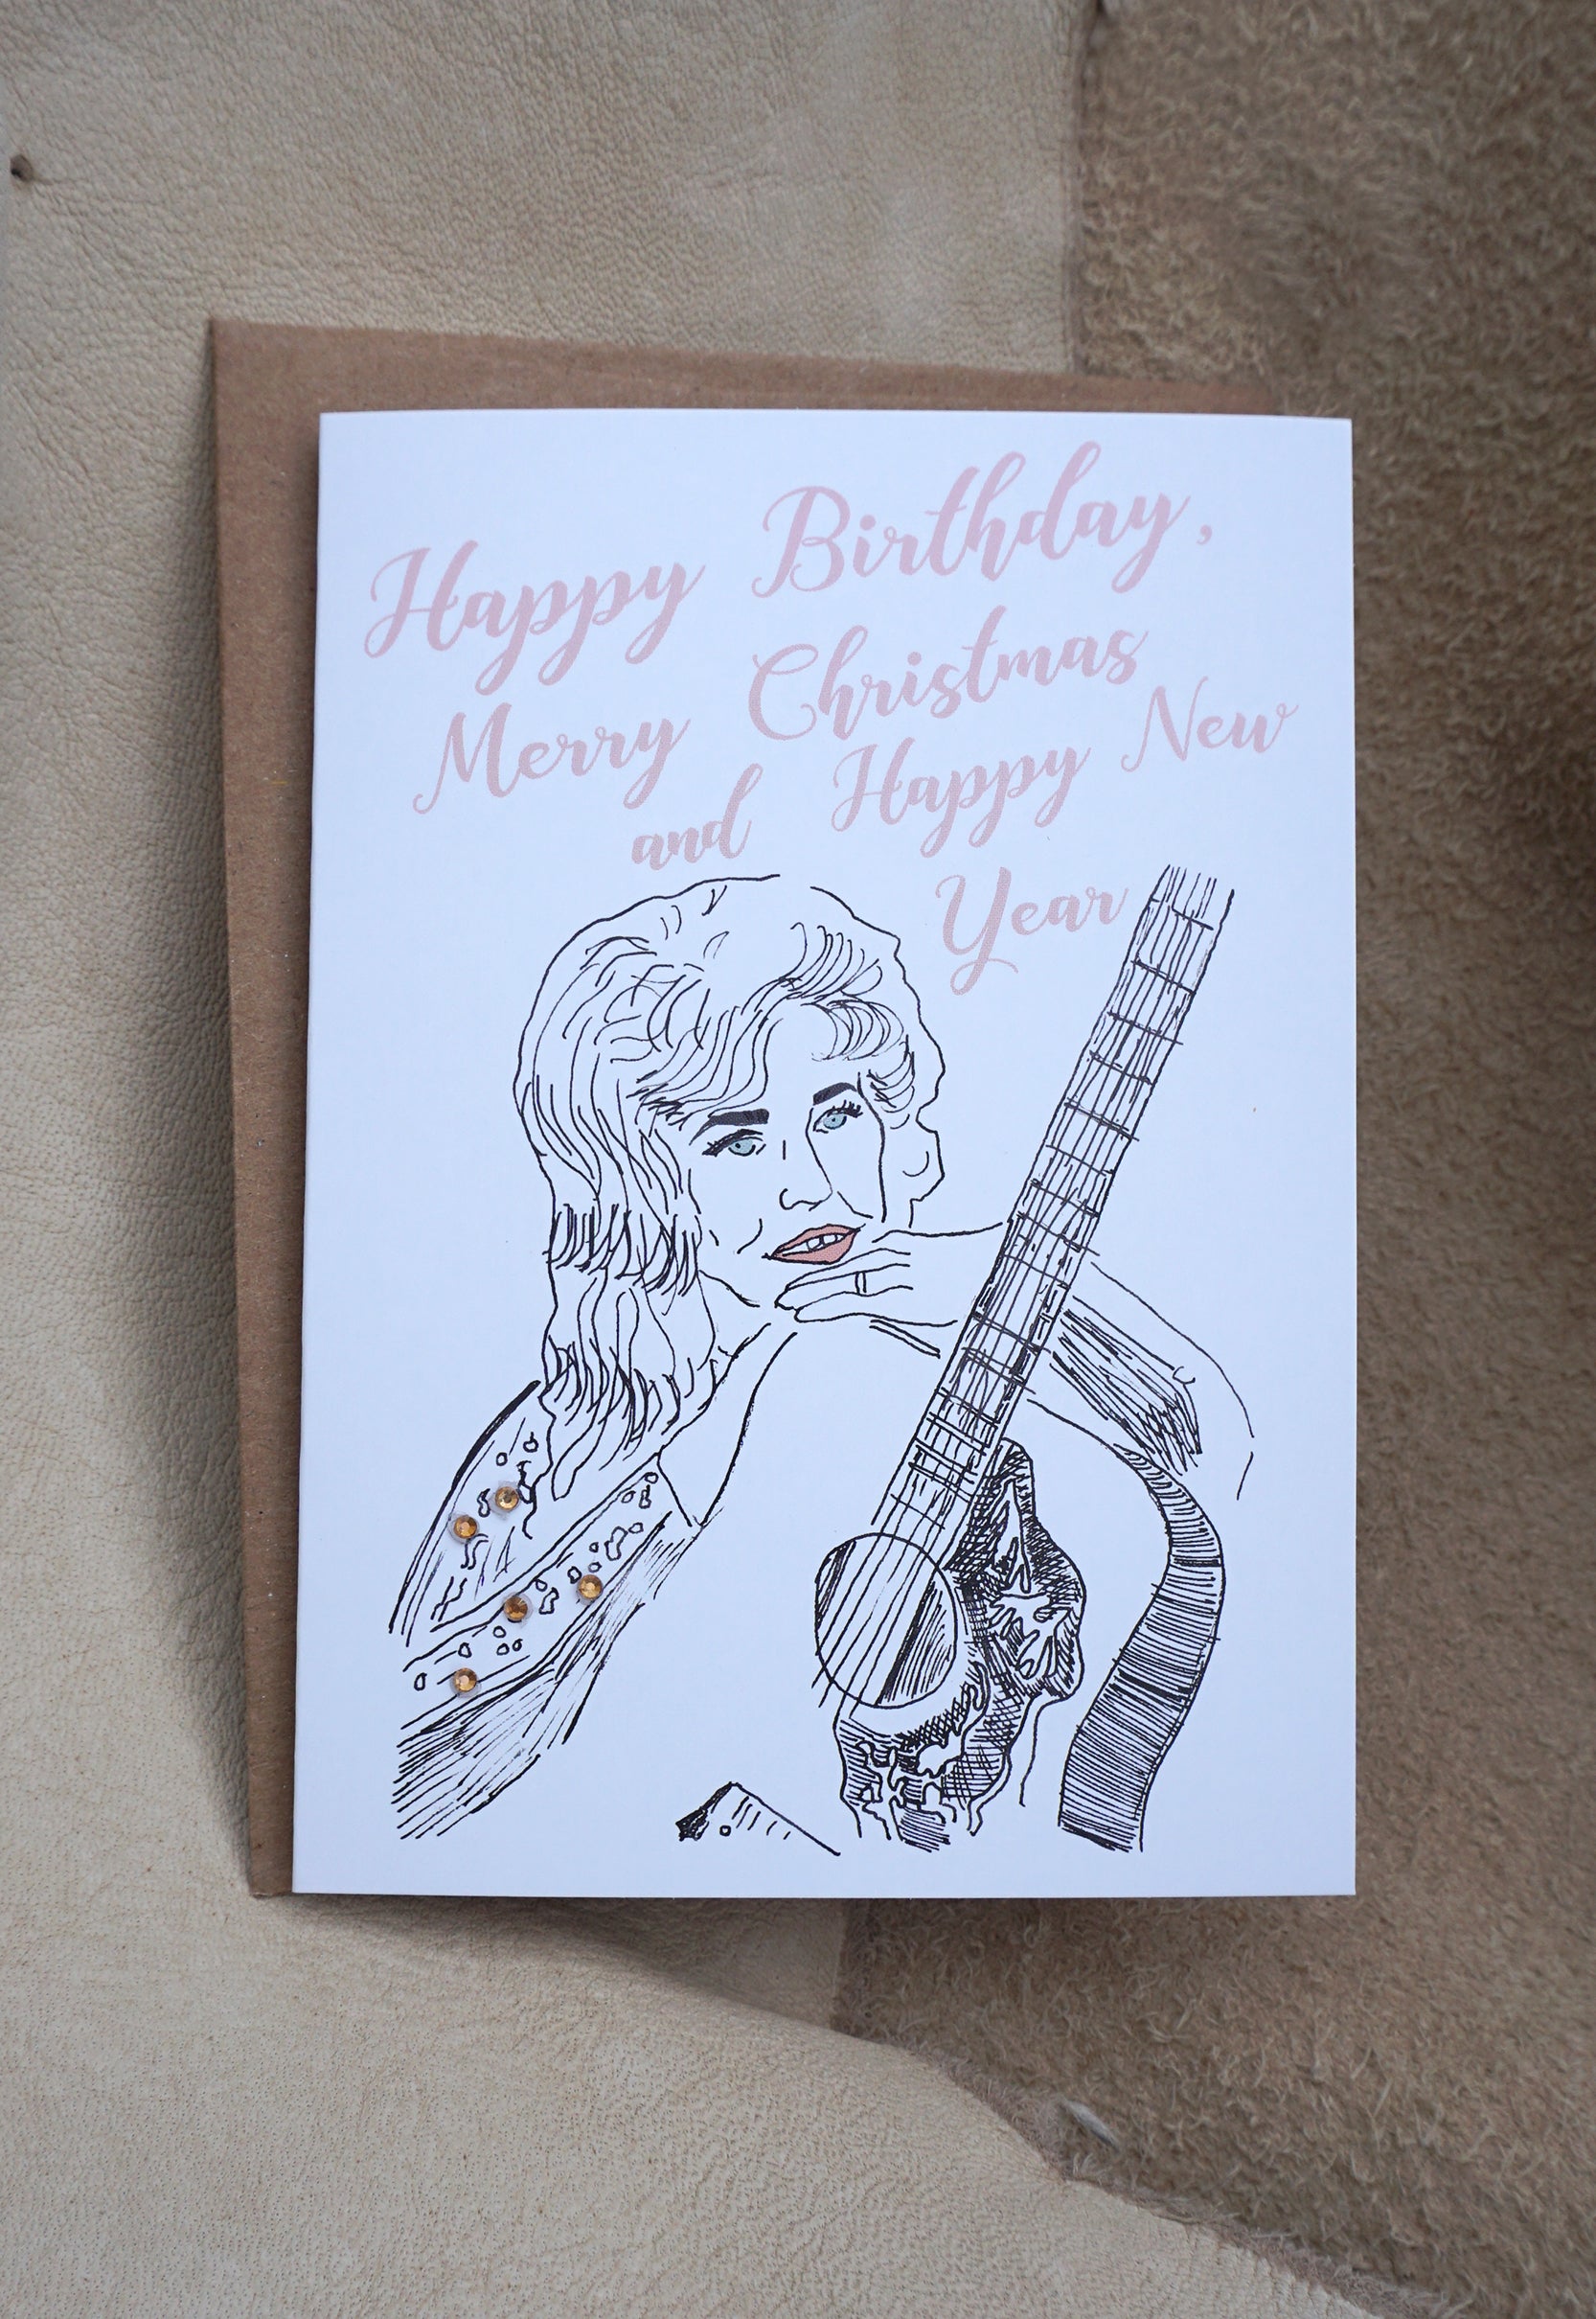 Happy Birthday, Merry Christmas & Happy New Year - Greeting Card